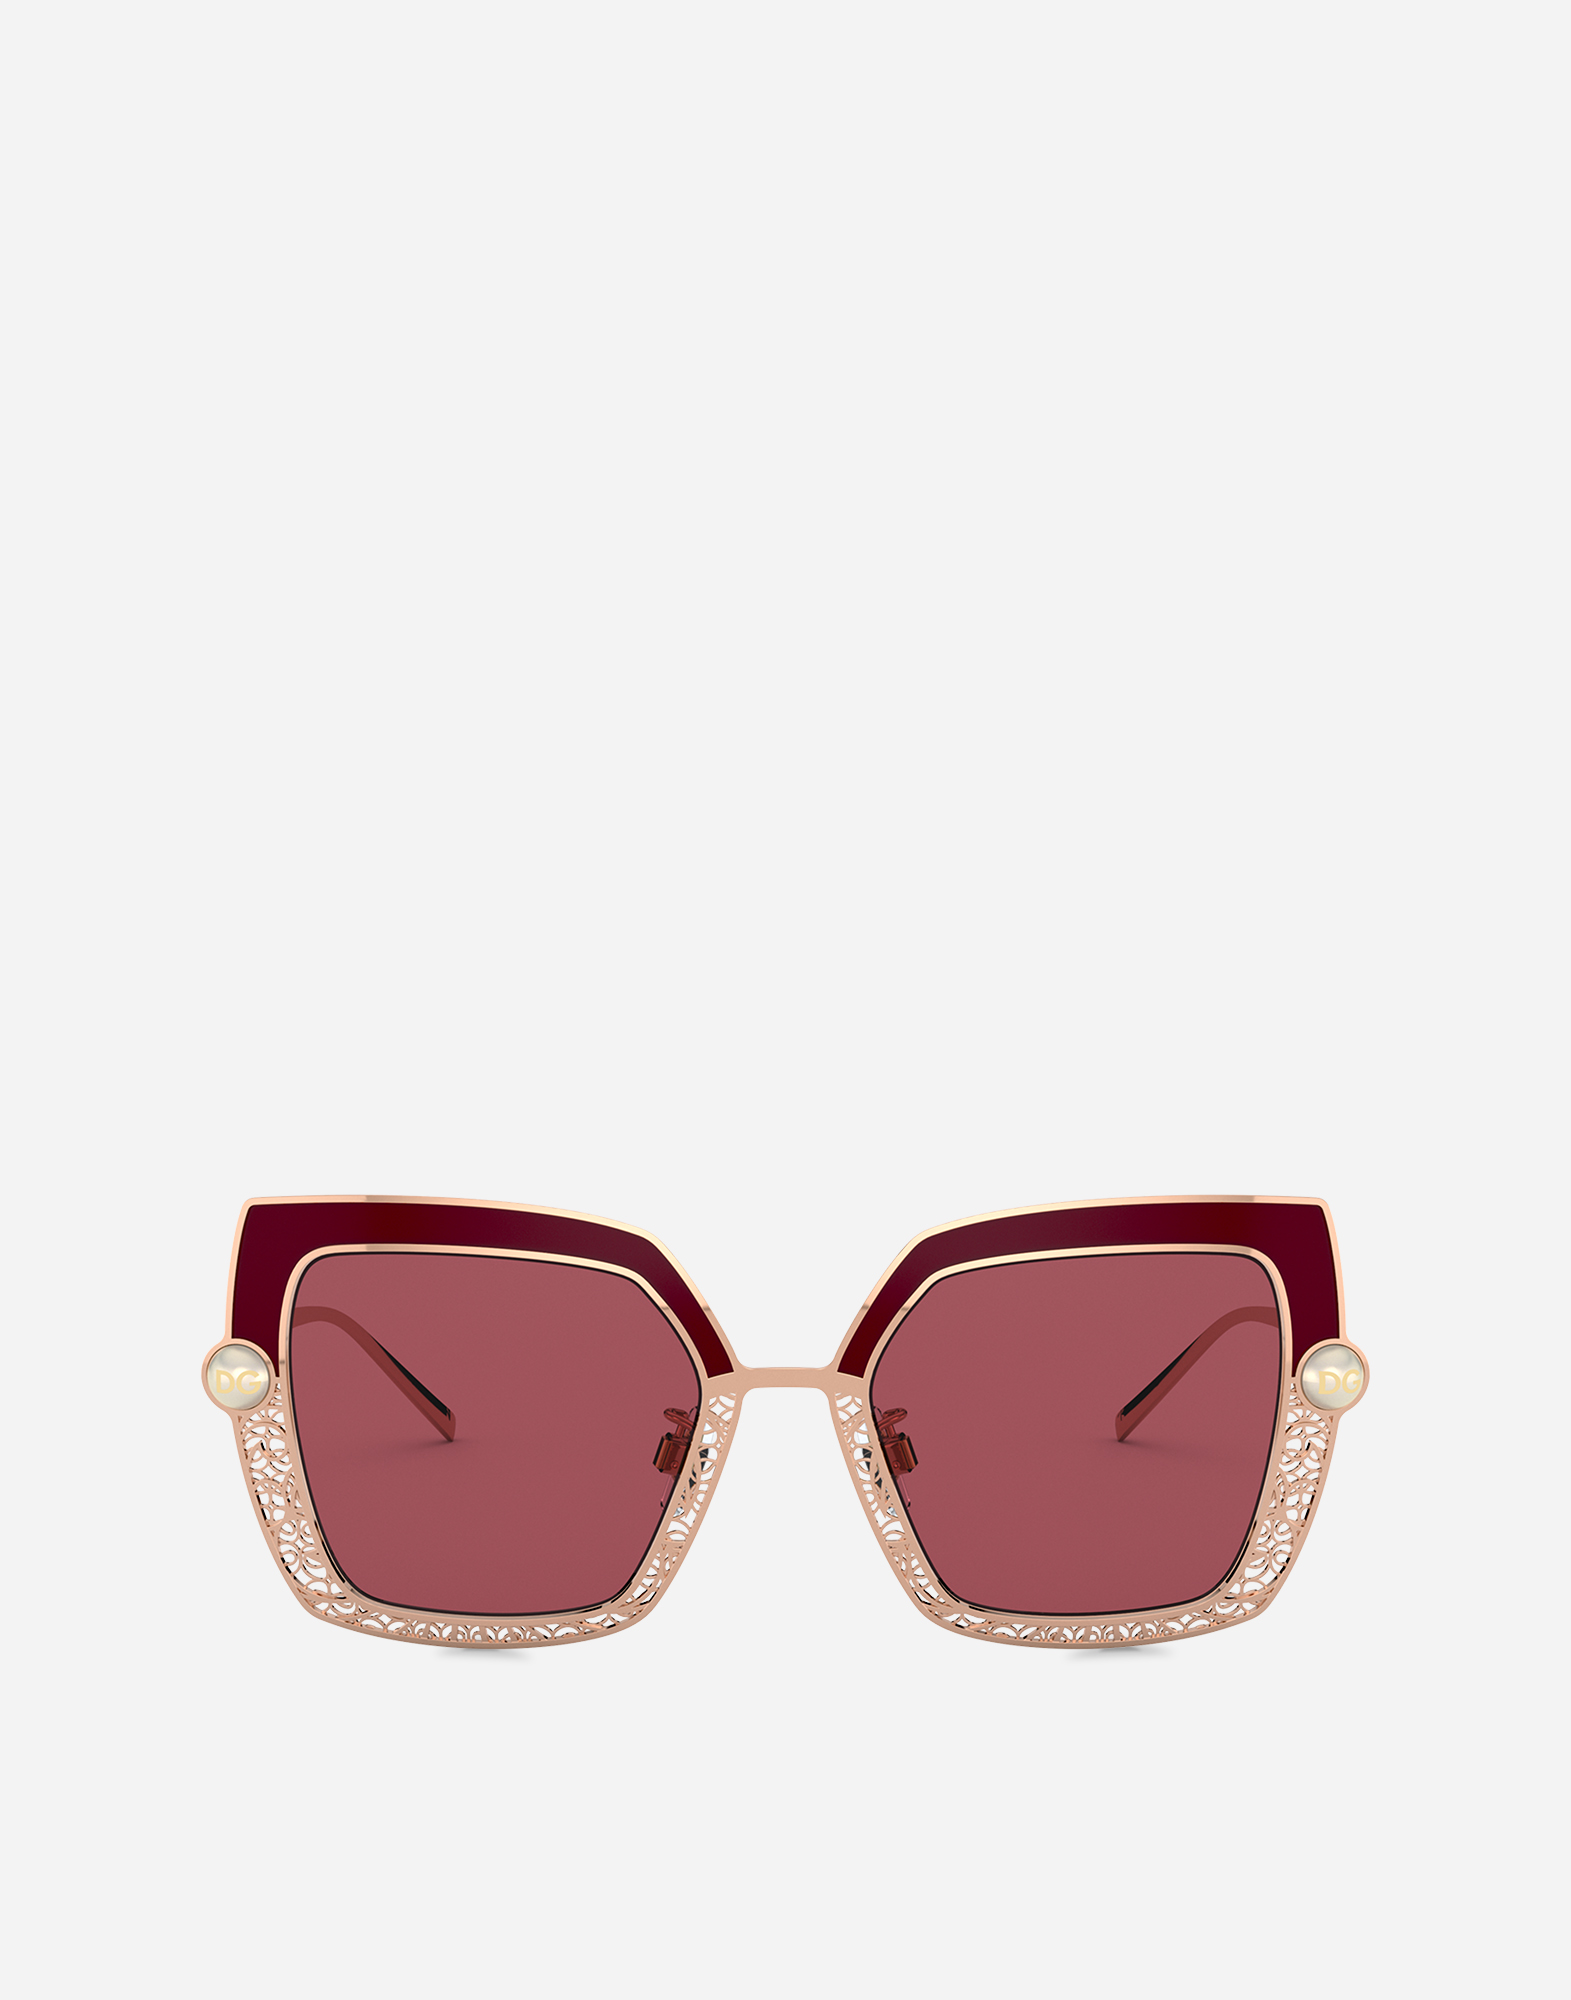 Filigree & pearls sunglasses in Bordeaux